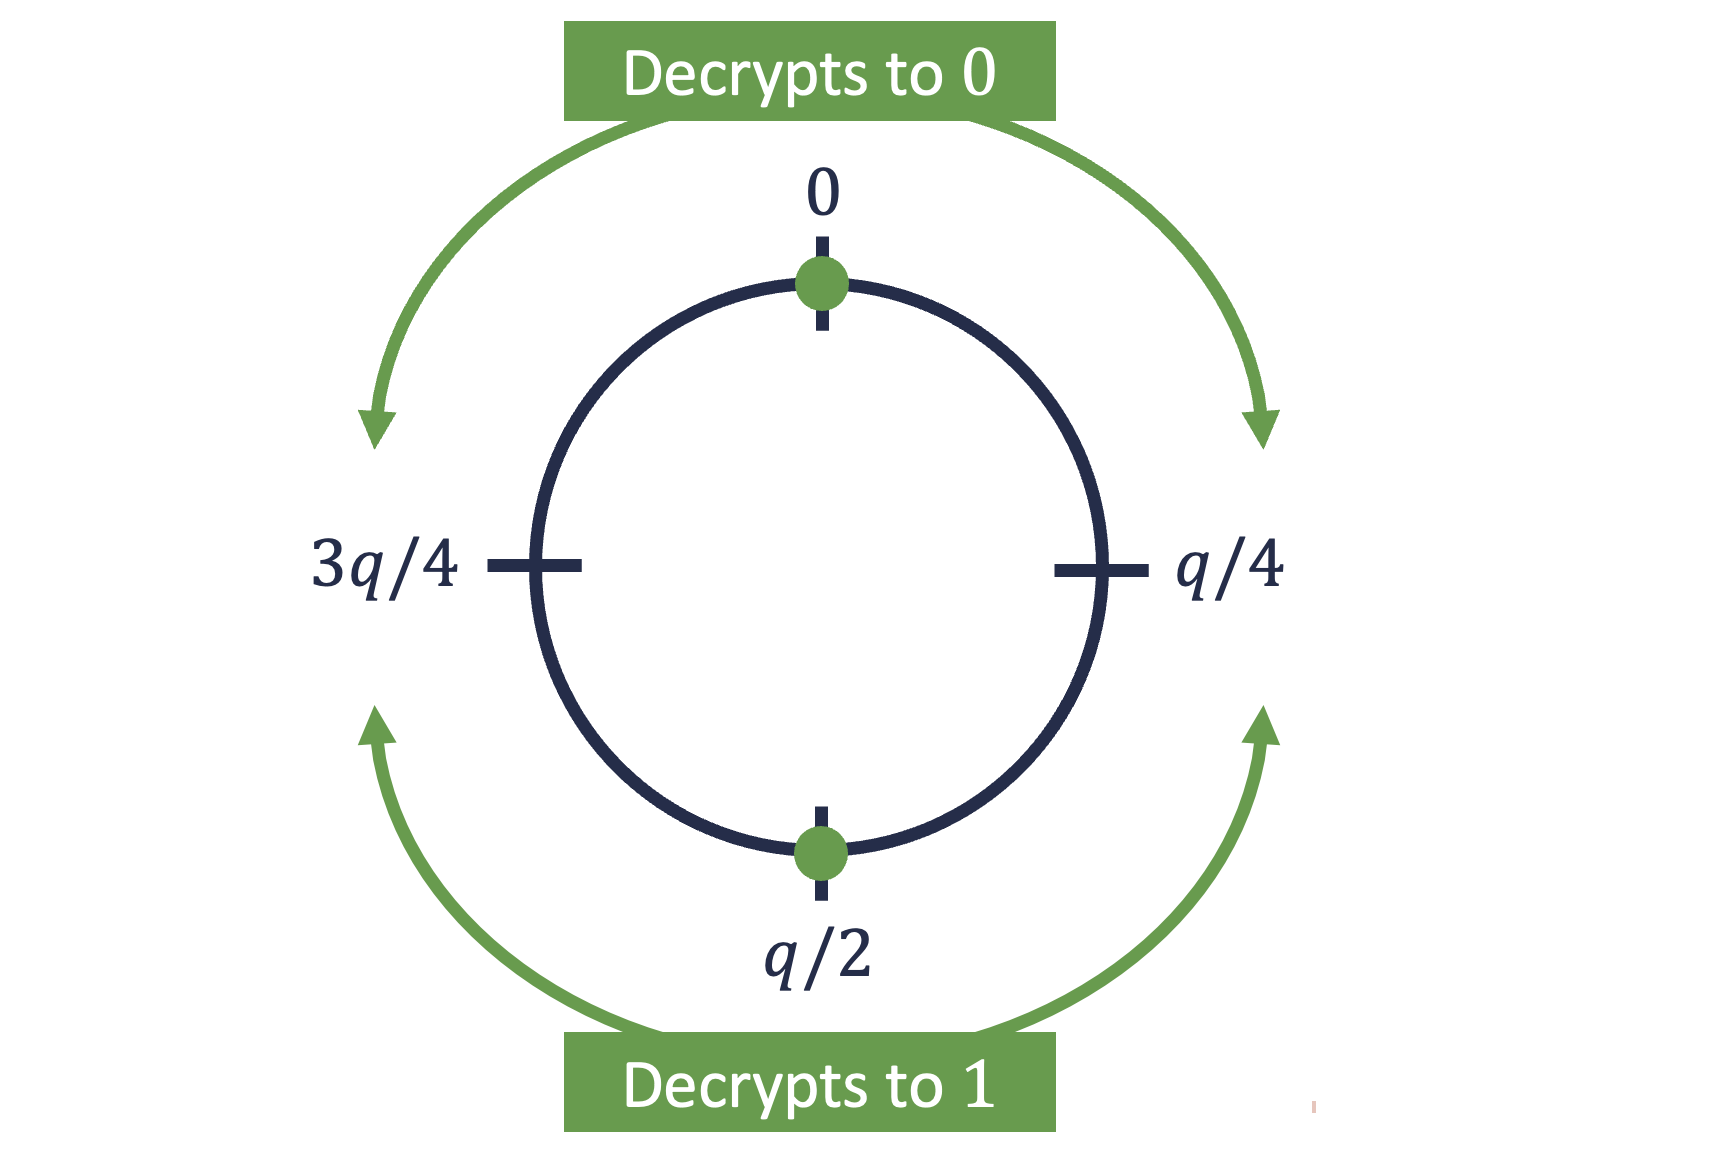 Decryption ranges